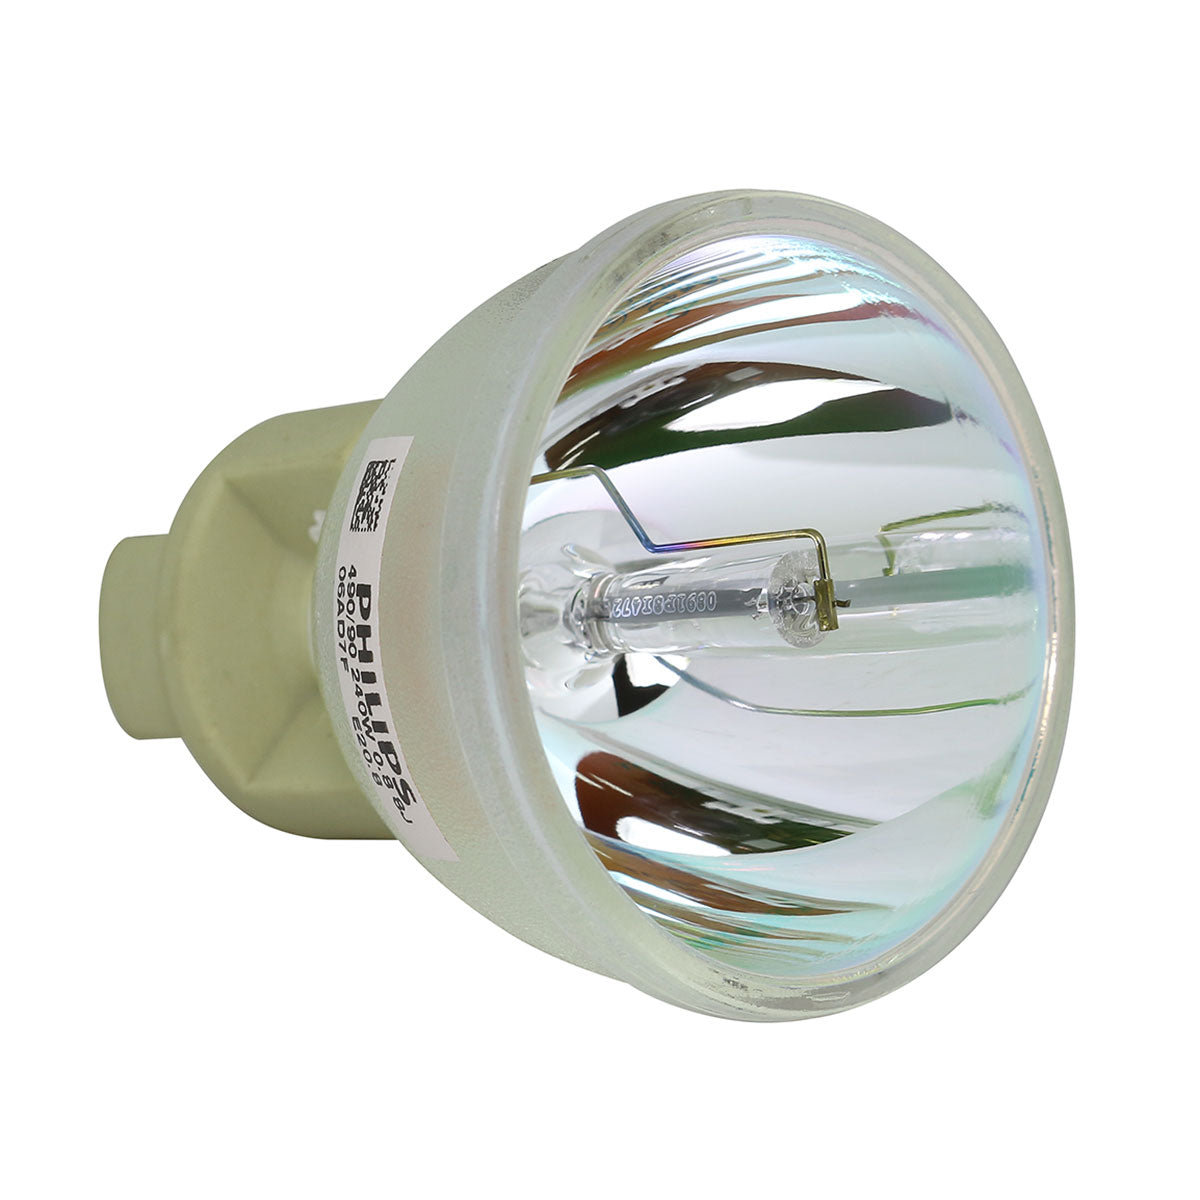 BenQ 5J.J0W05.001 Philips Projector Bare Lamp